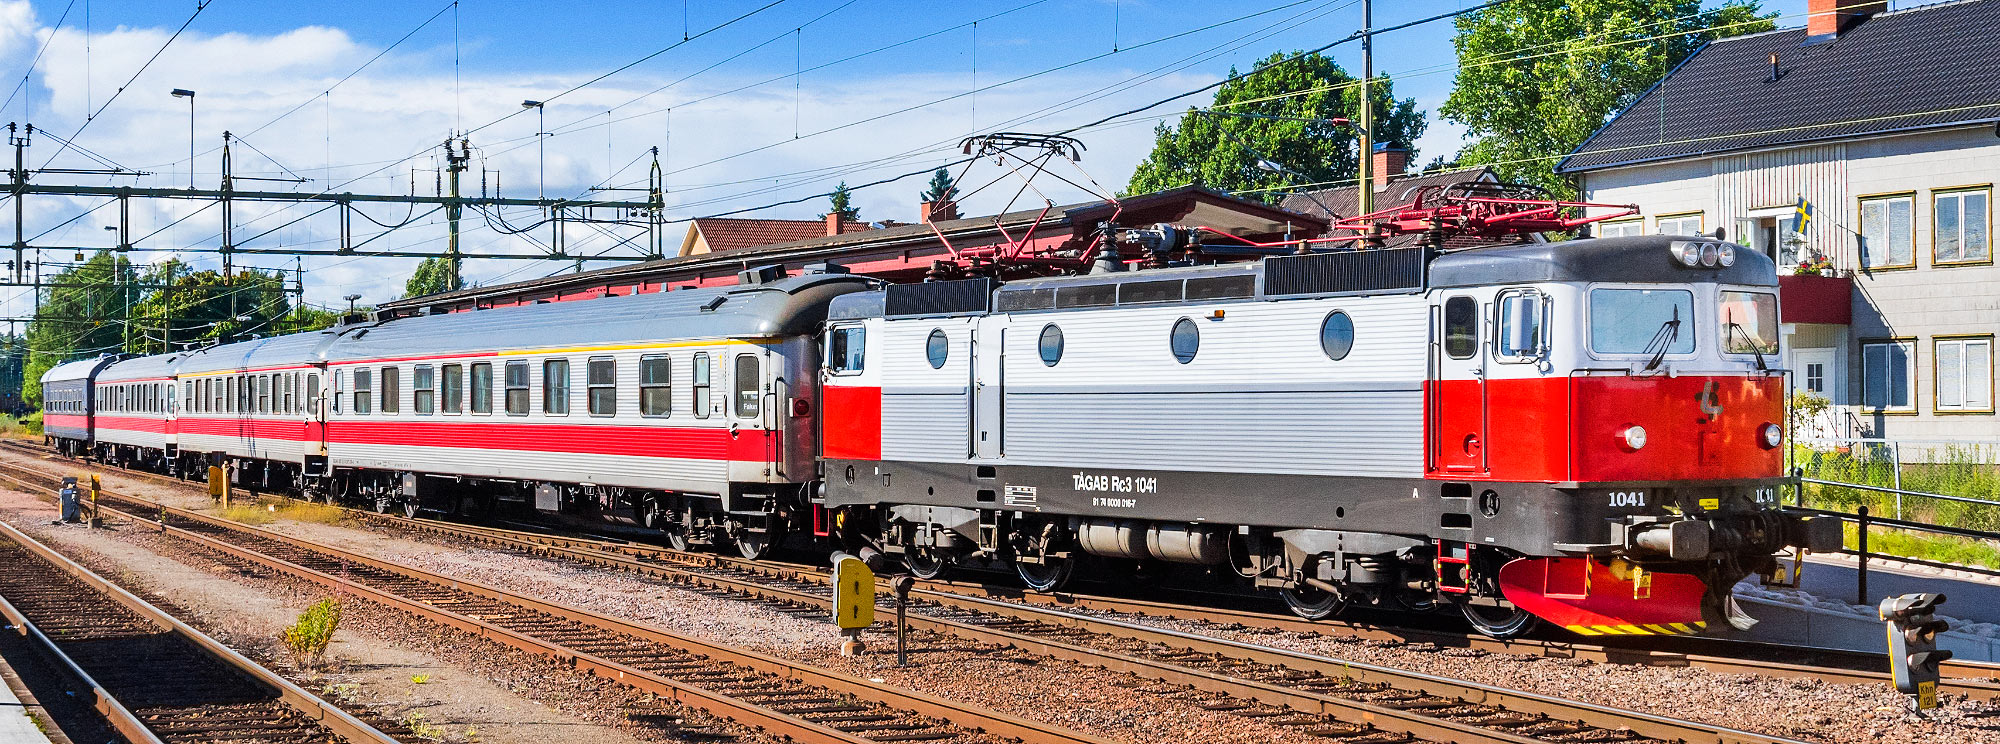 Tågab Rc3 1041 med persontåg i Kristinehamn 2016